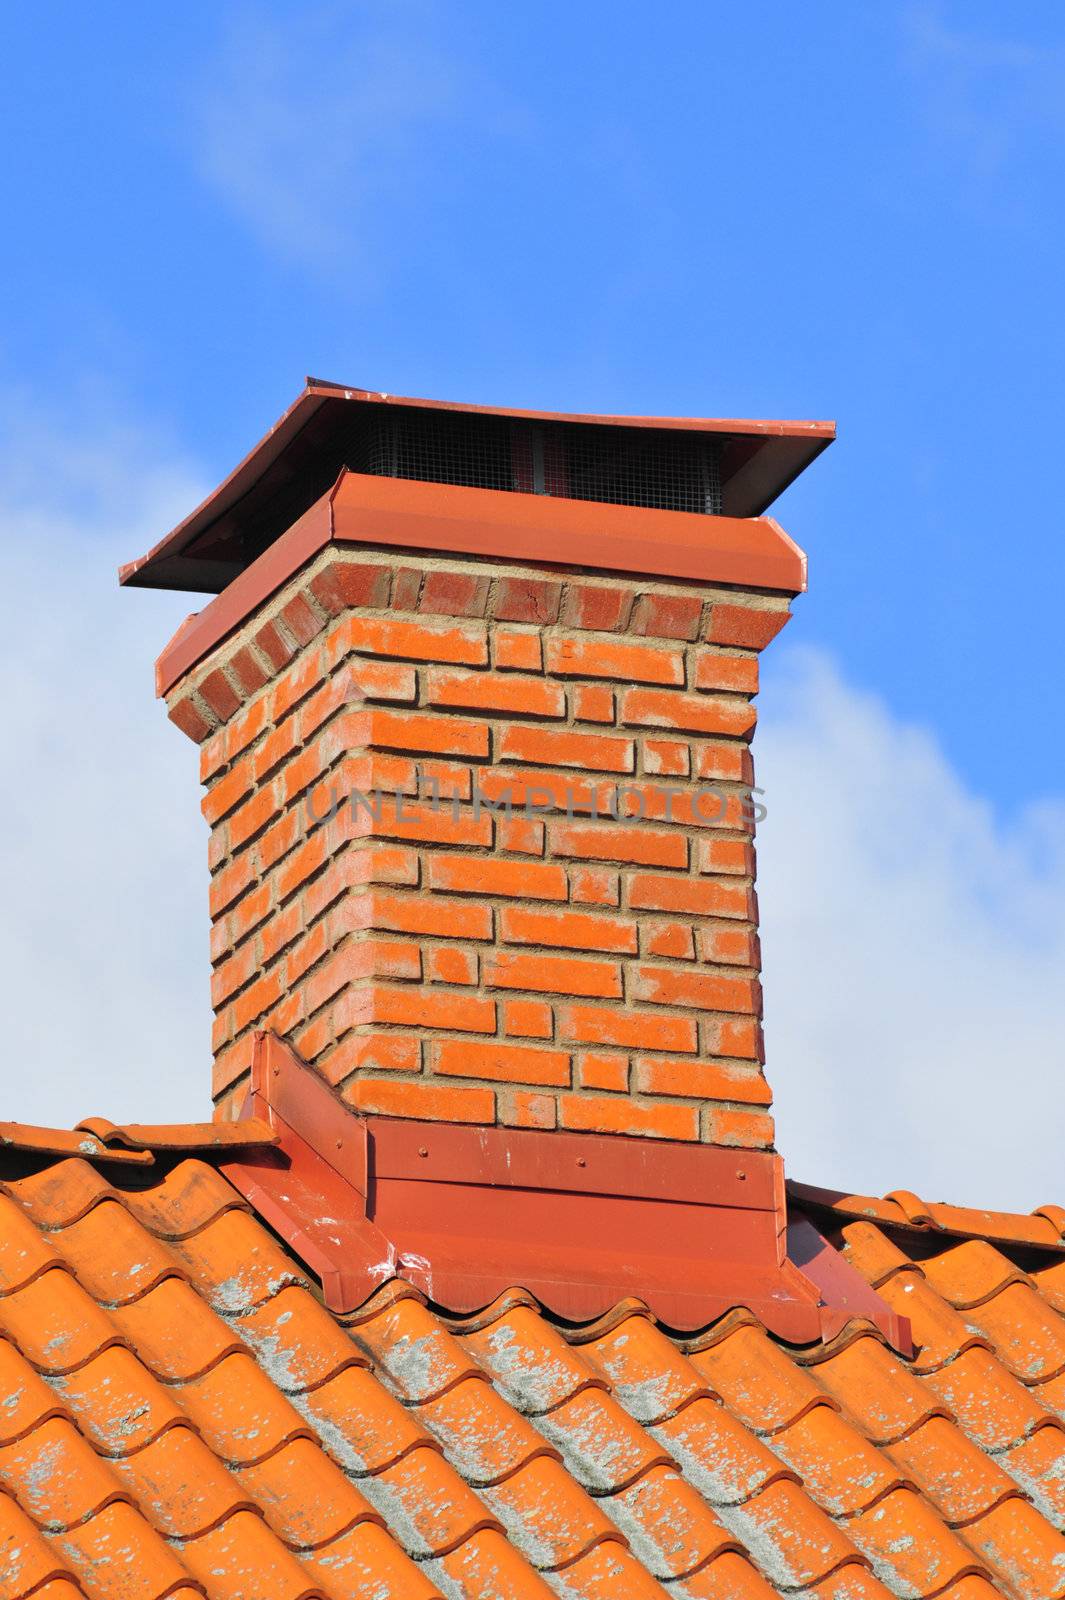 Red brick chimney on tile roof